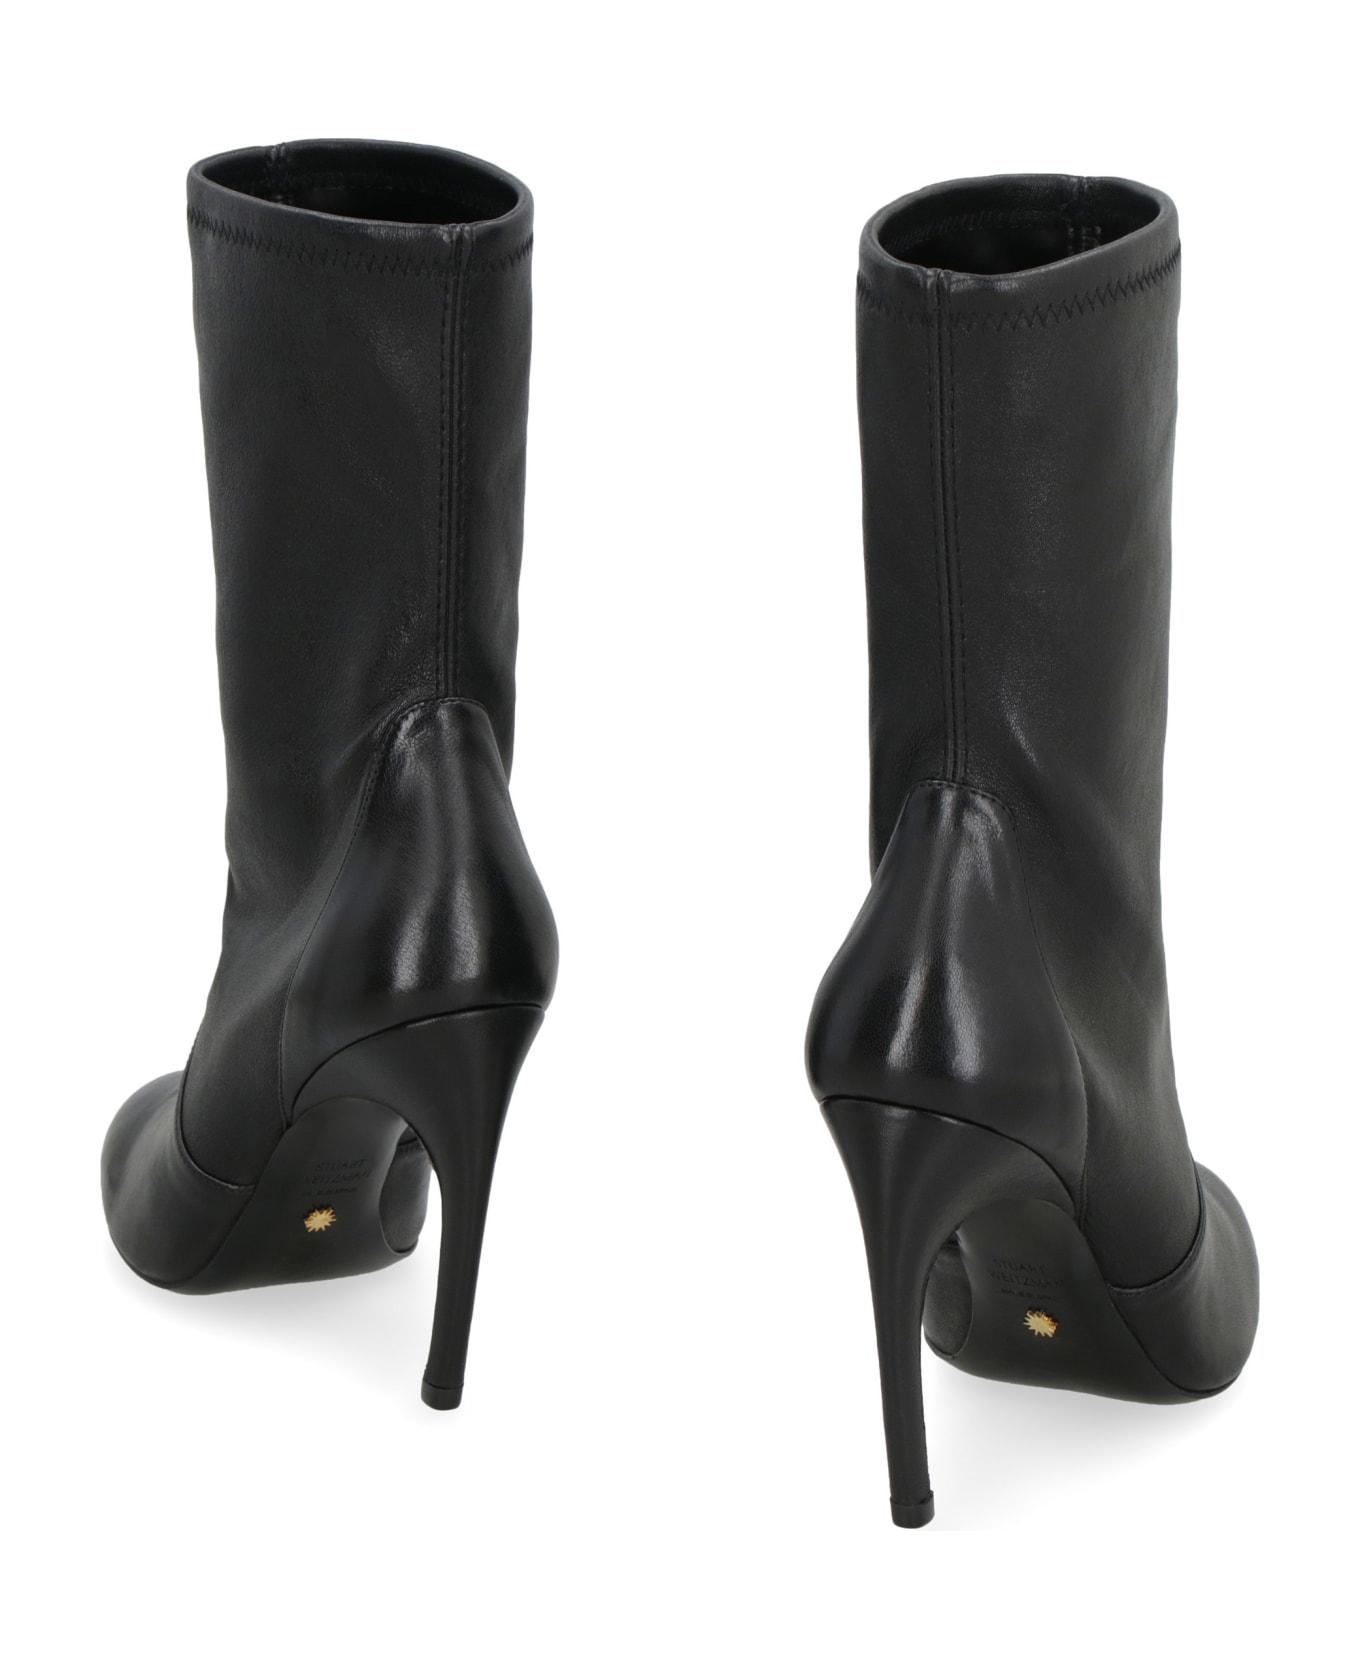 Stuart Weitzman Luxecurve Leather Ankle Boots - black